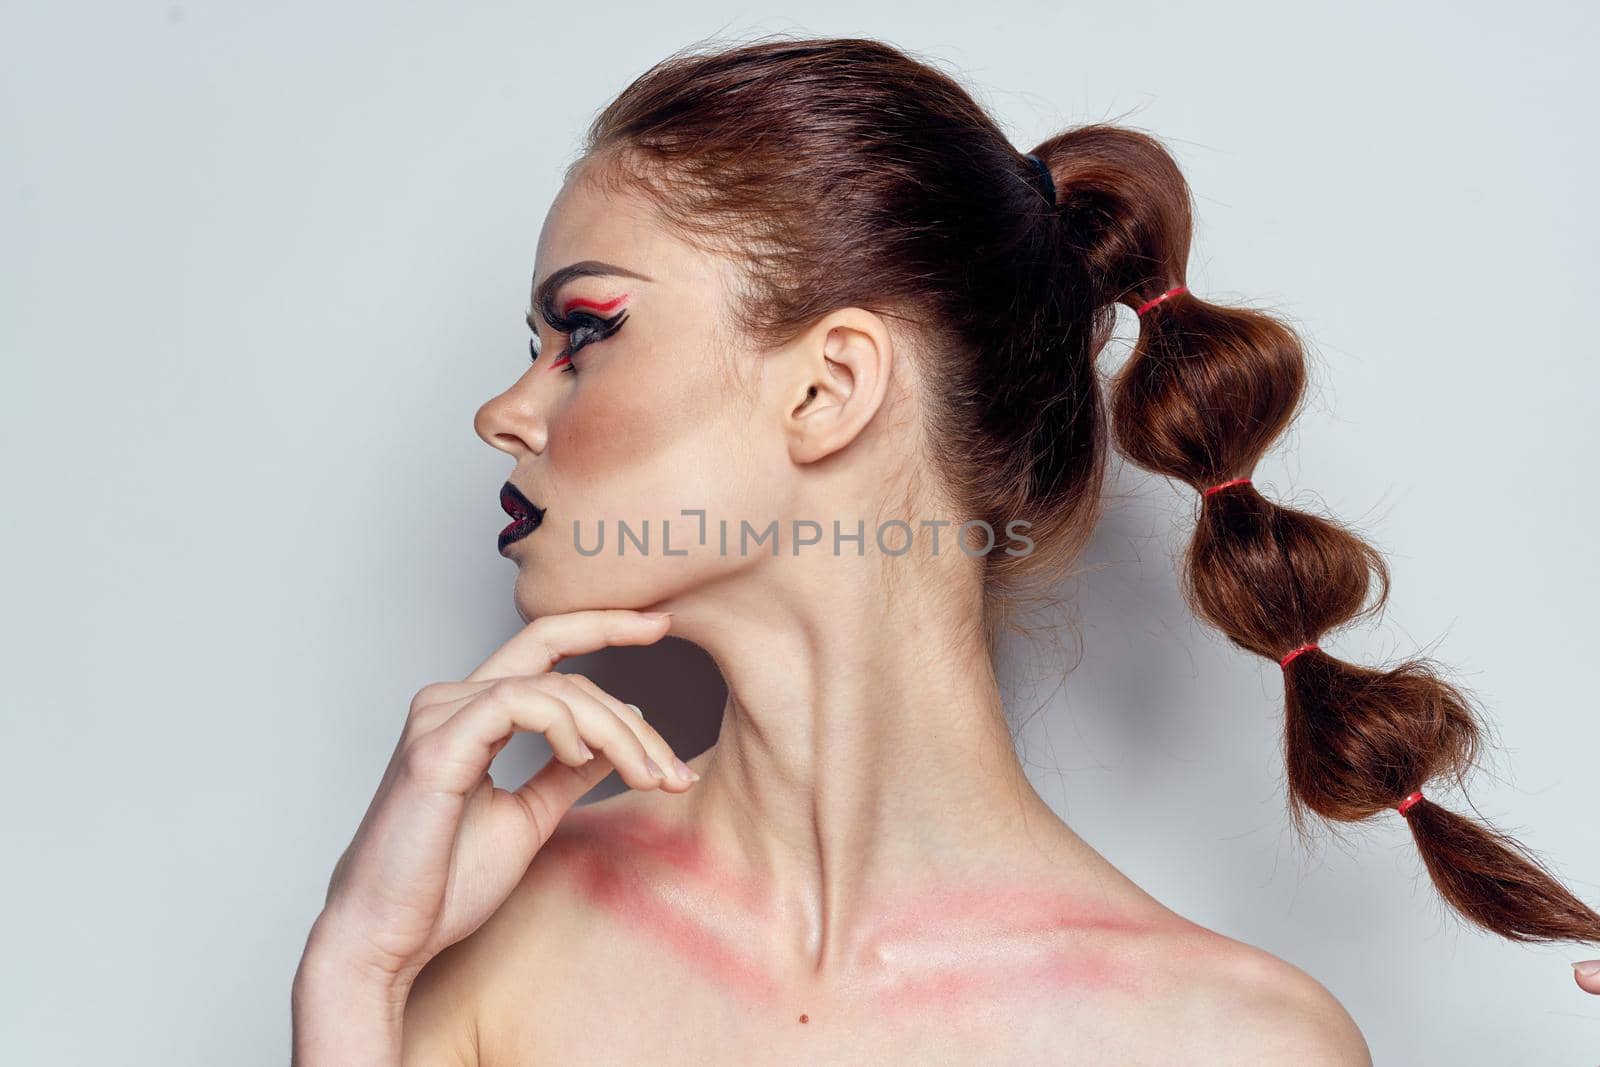 beautiful woman posing scorpio sign on forehead cosmetics light background. High quality photo